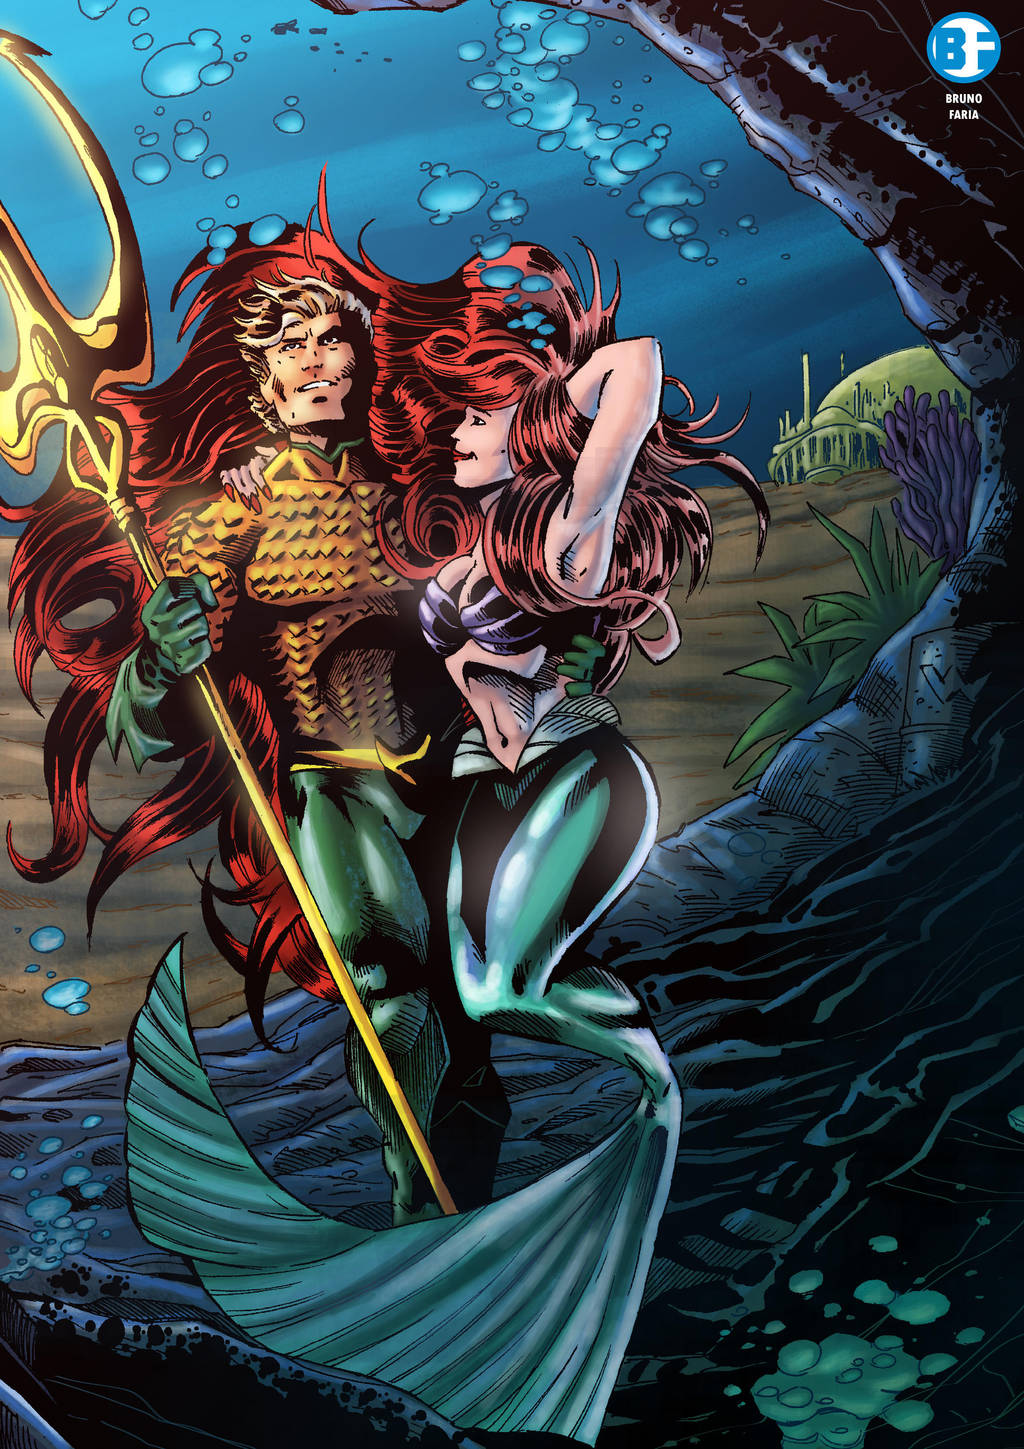 Aquaman and Ariel by BrunoFariaINK on DeviantArt